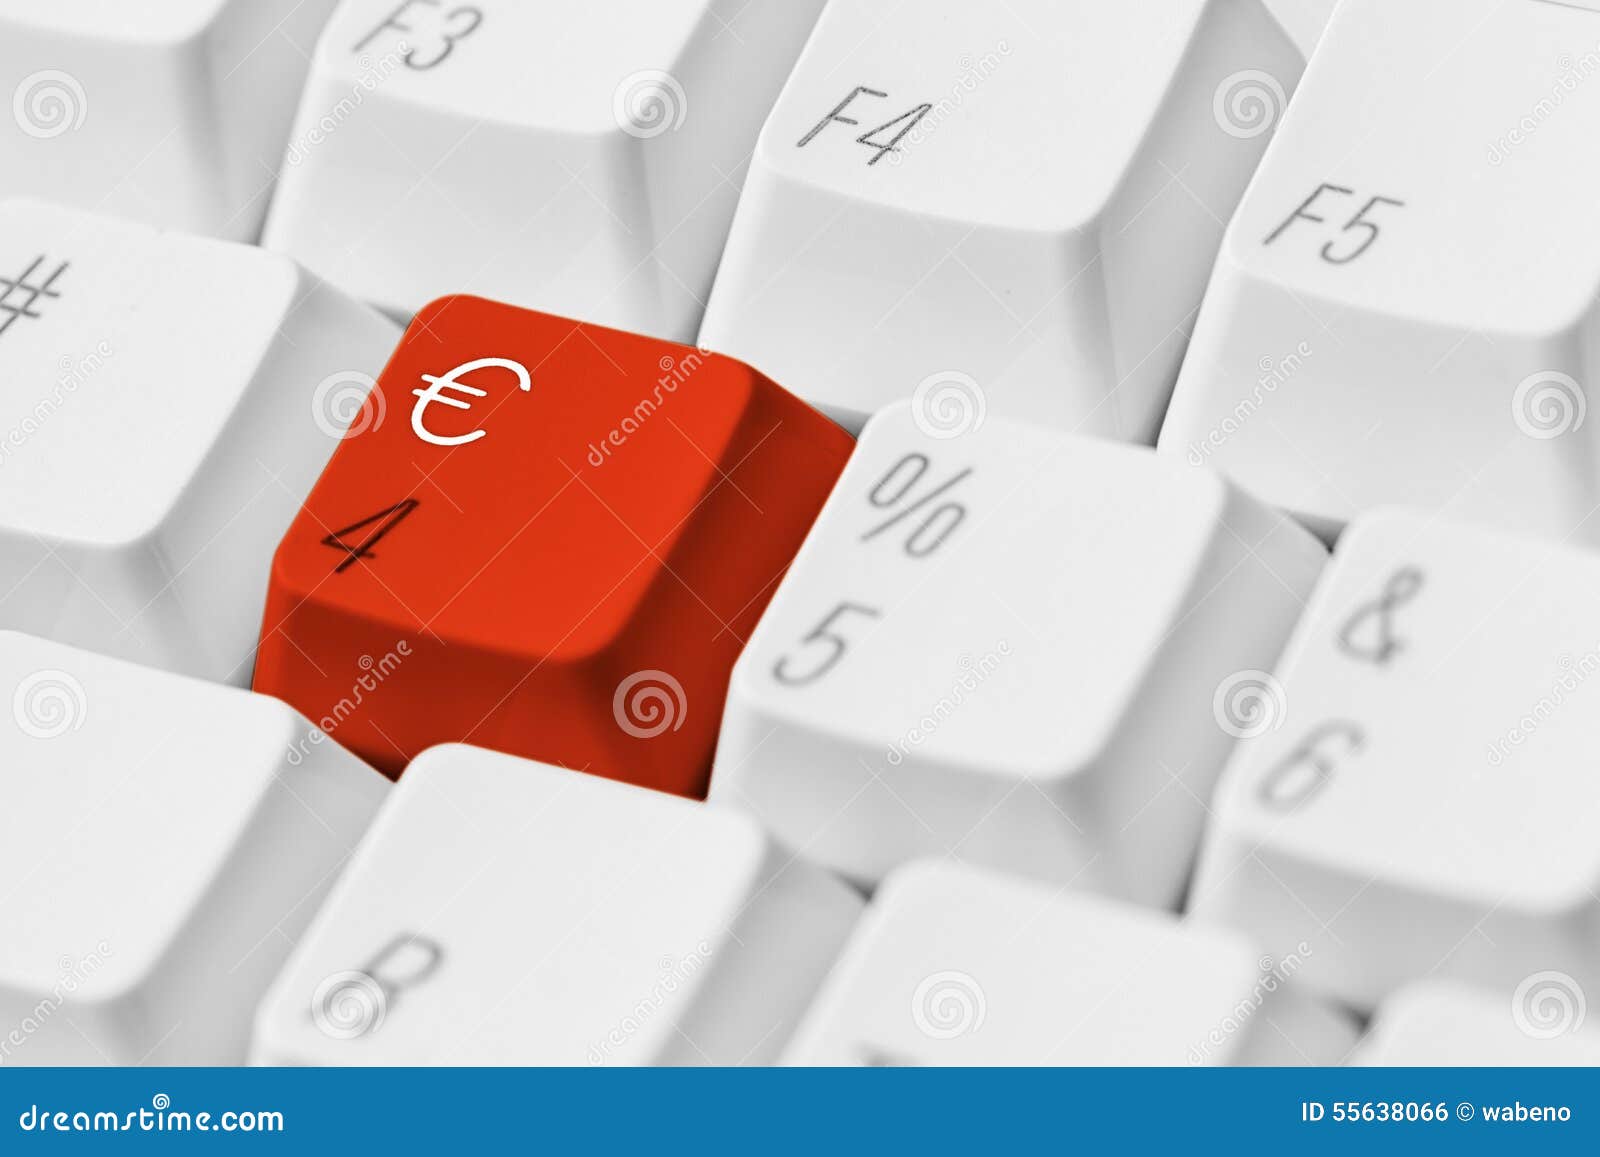 Red key with euro symbol stock photo. Image of money - 55638066